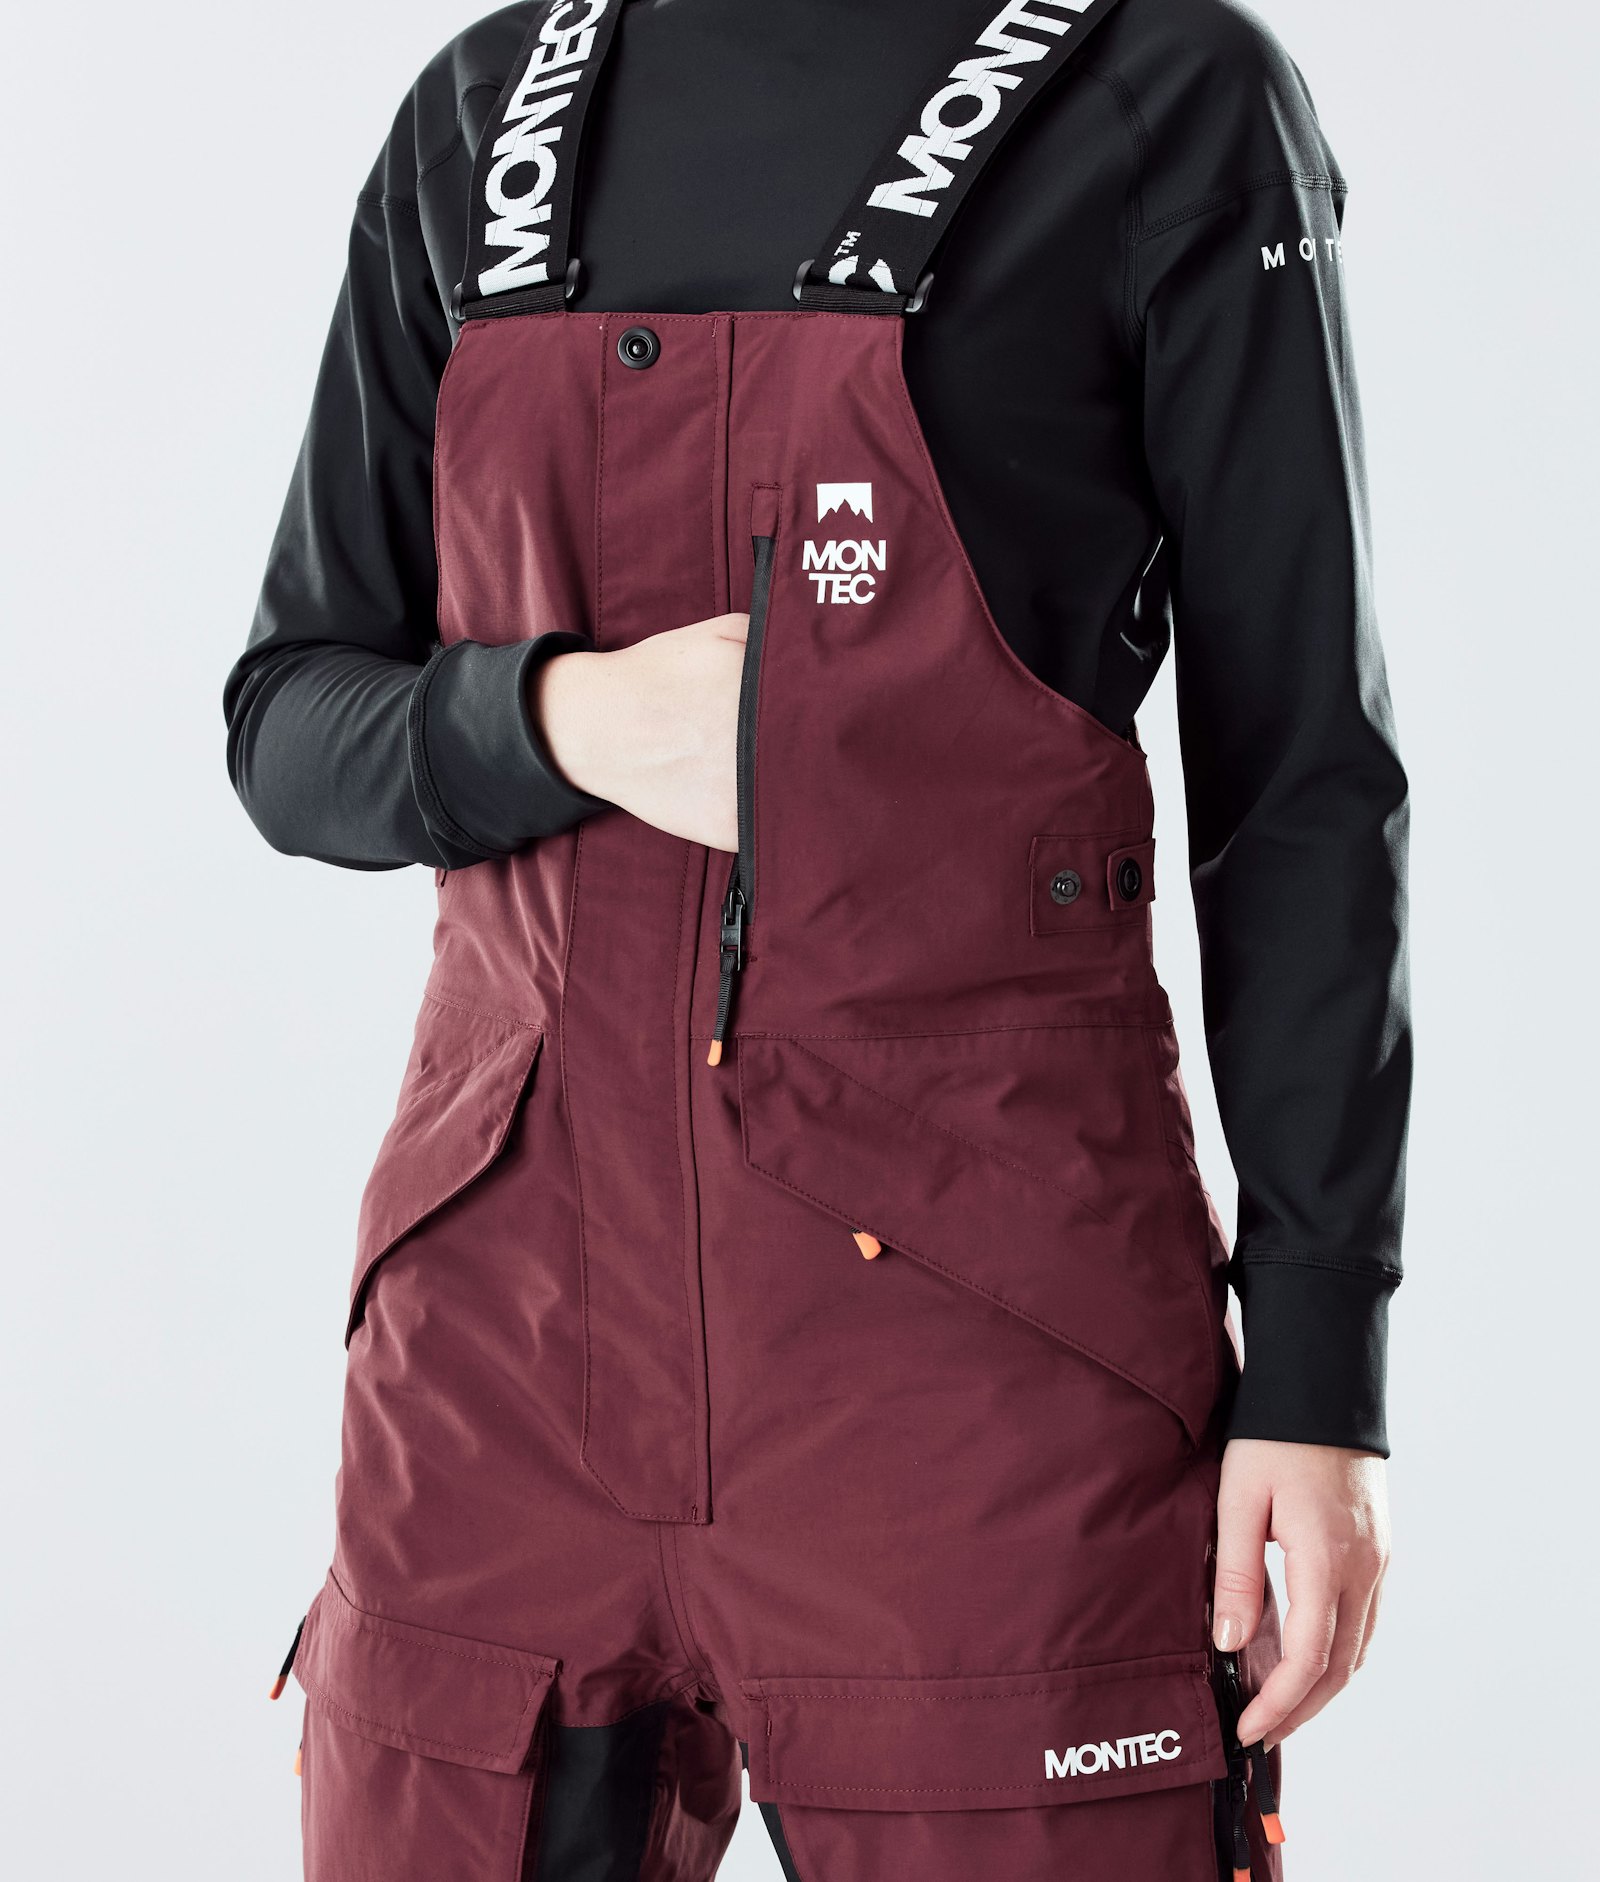 Fawk W 2020 Kalhoty na Snowboard Dámské Burgundy/Black